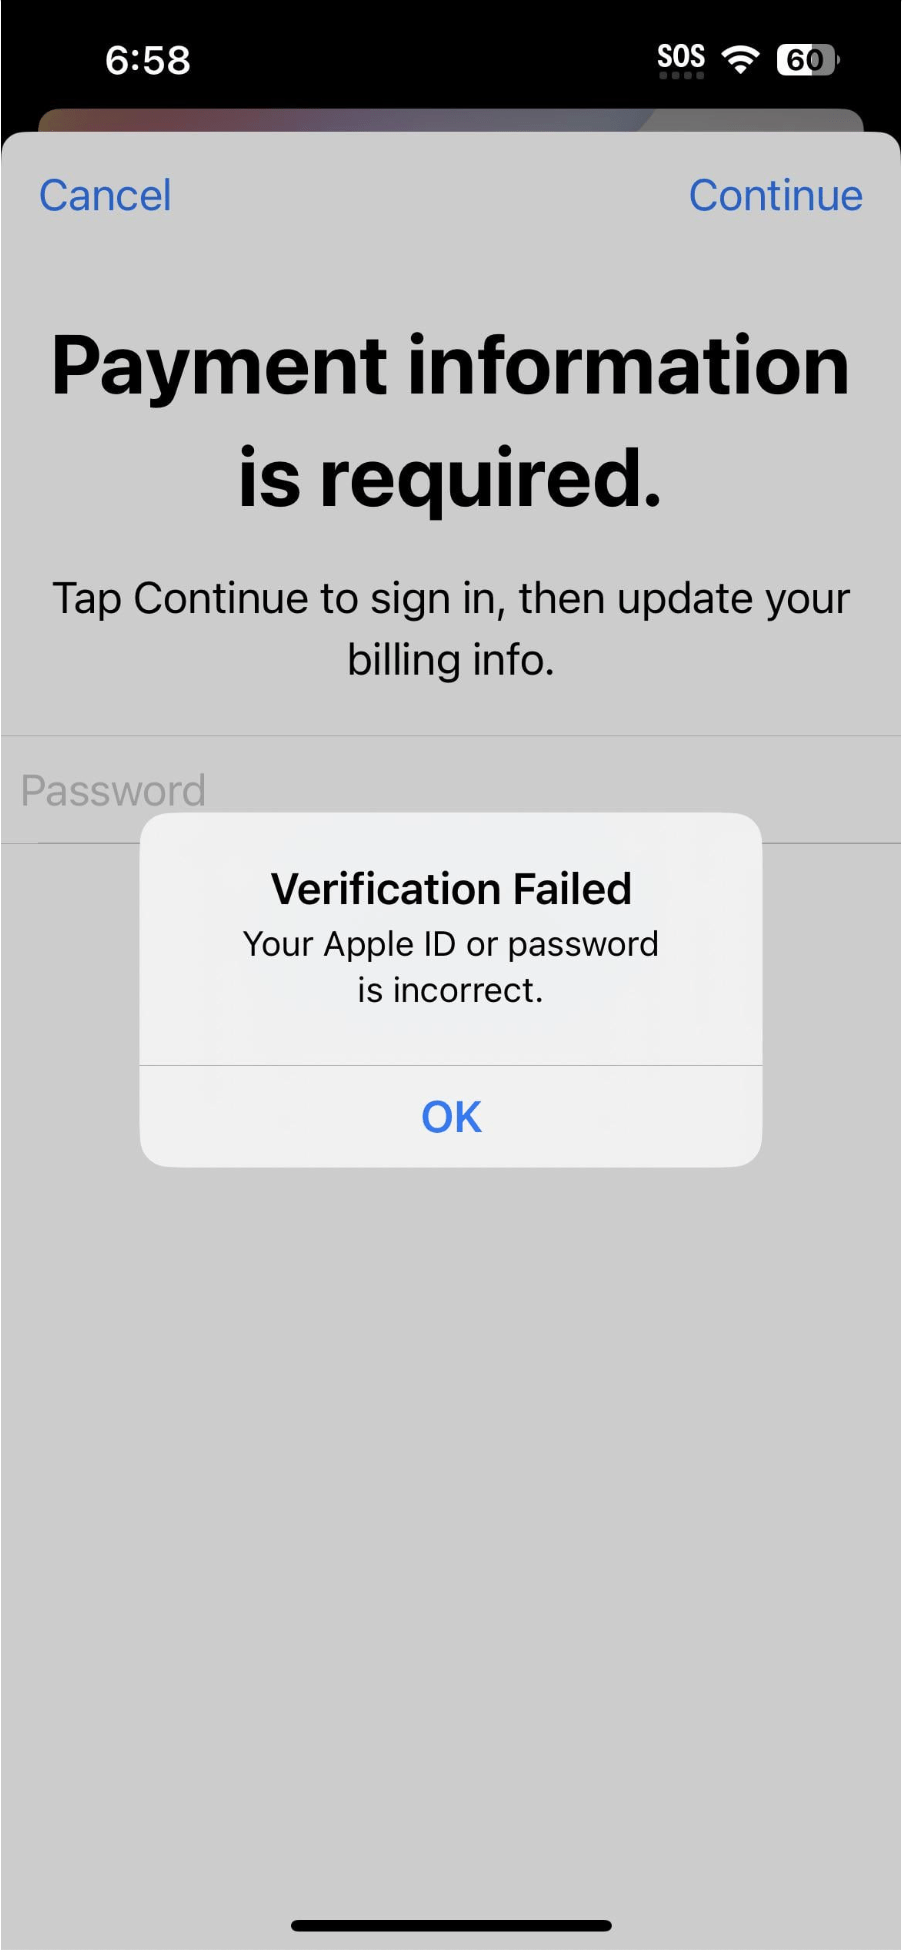 verification failed error on iPhone in App Store